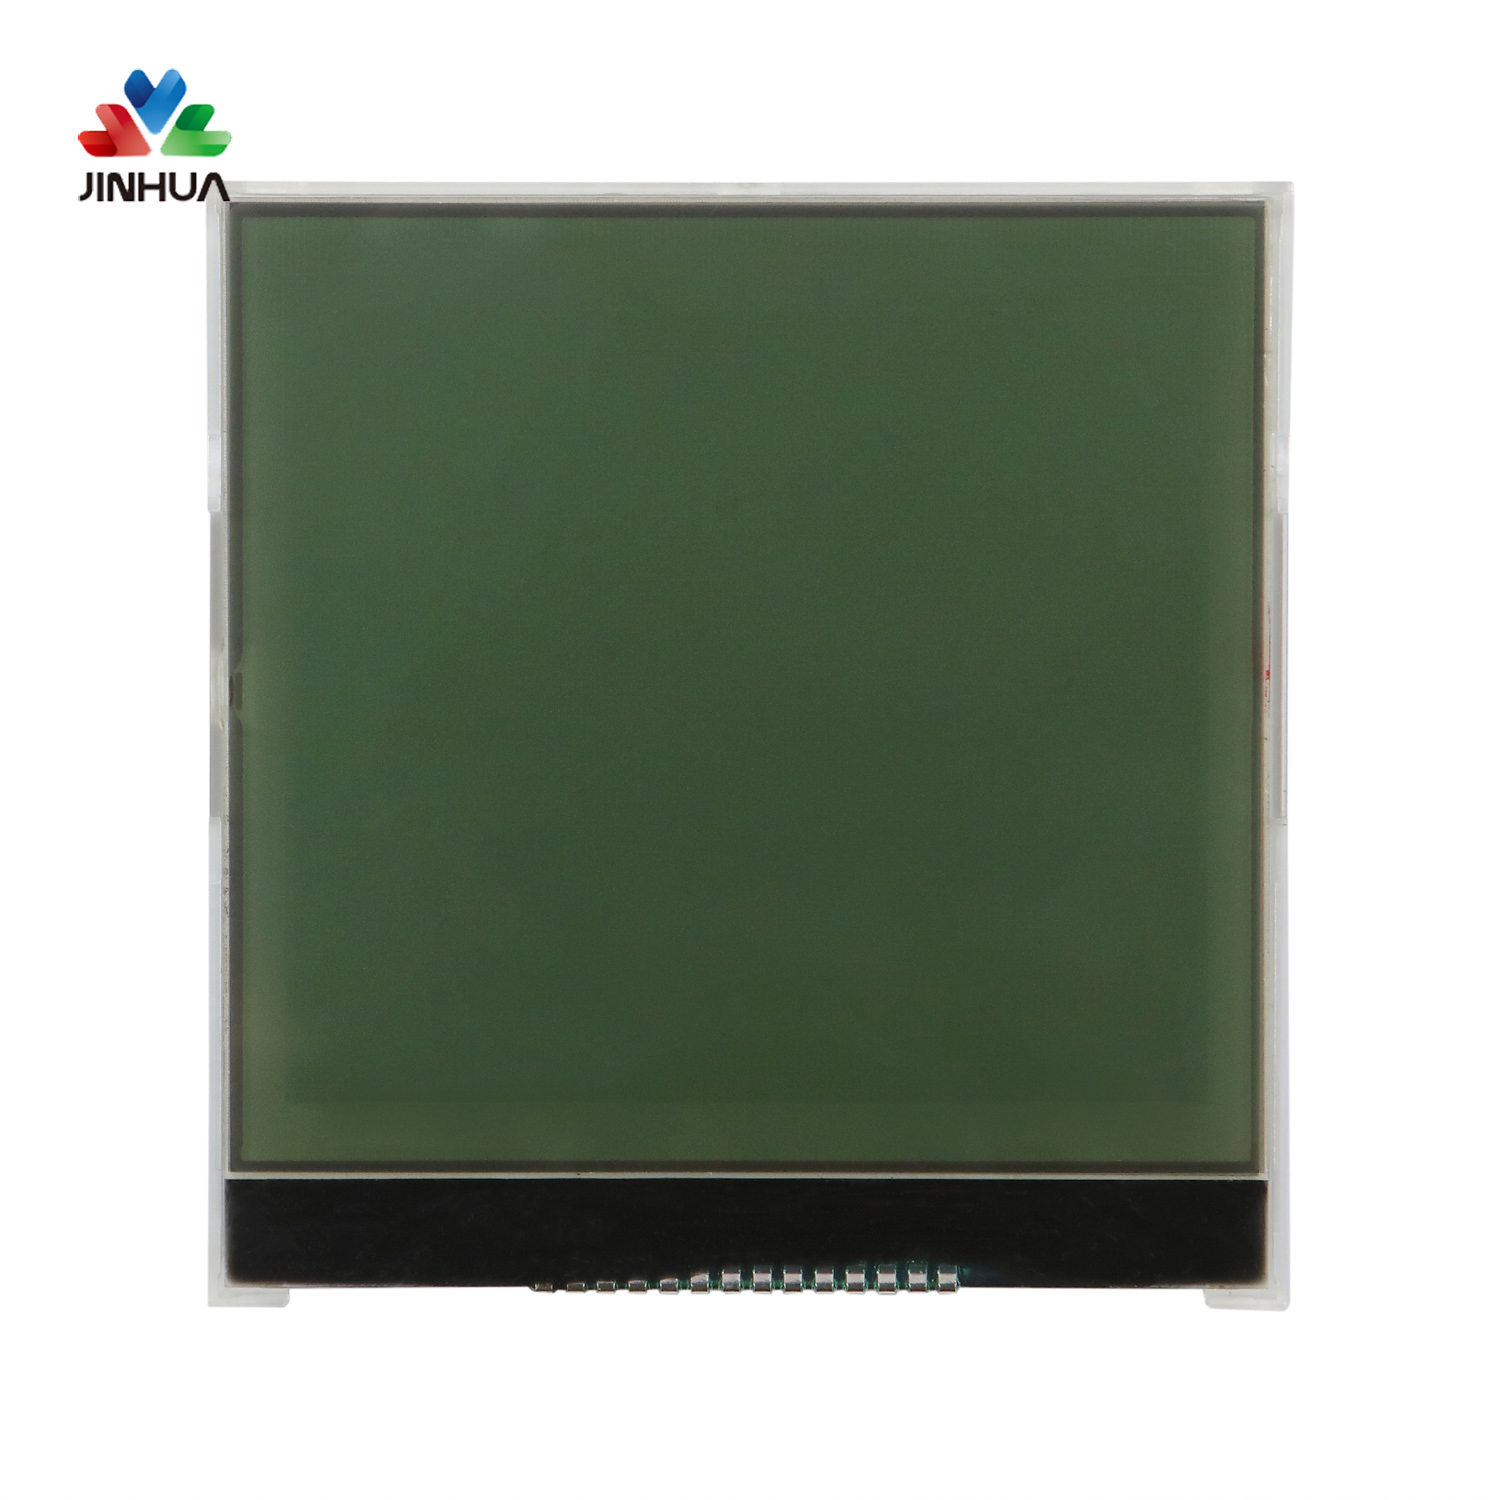 FPC Positive Transflective FSTN Dot Matrix LCD Screen China Manufacturer